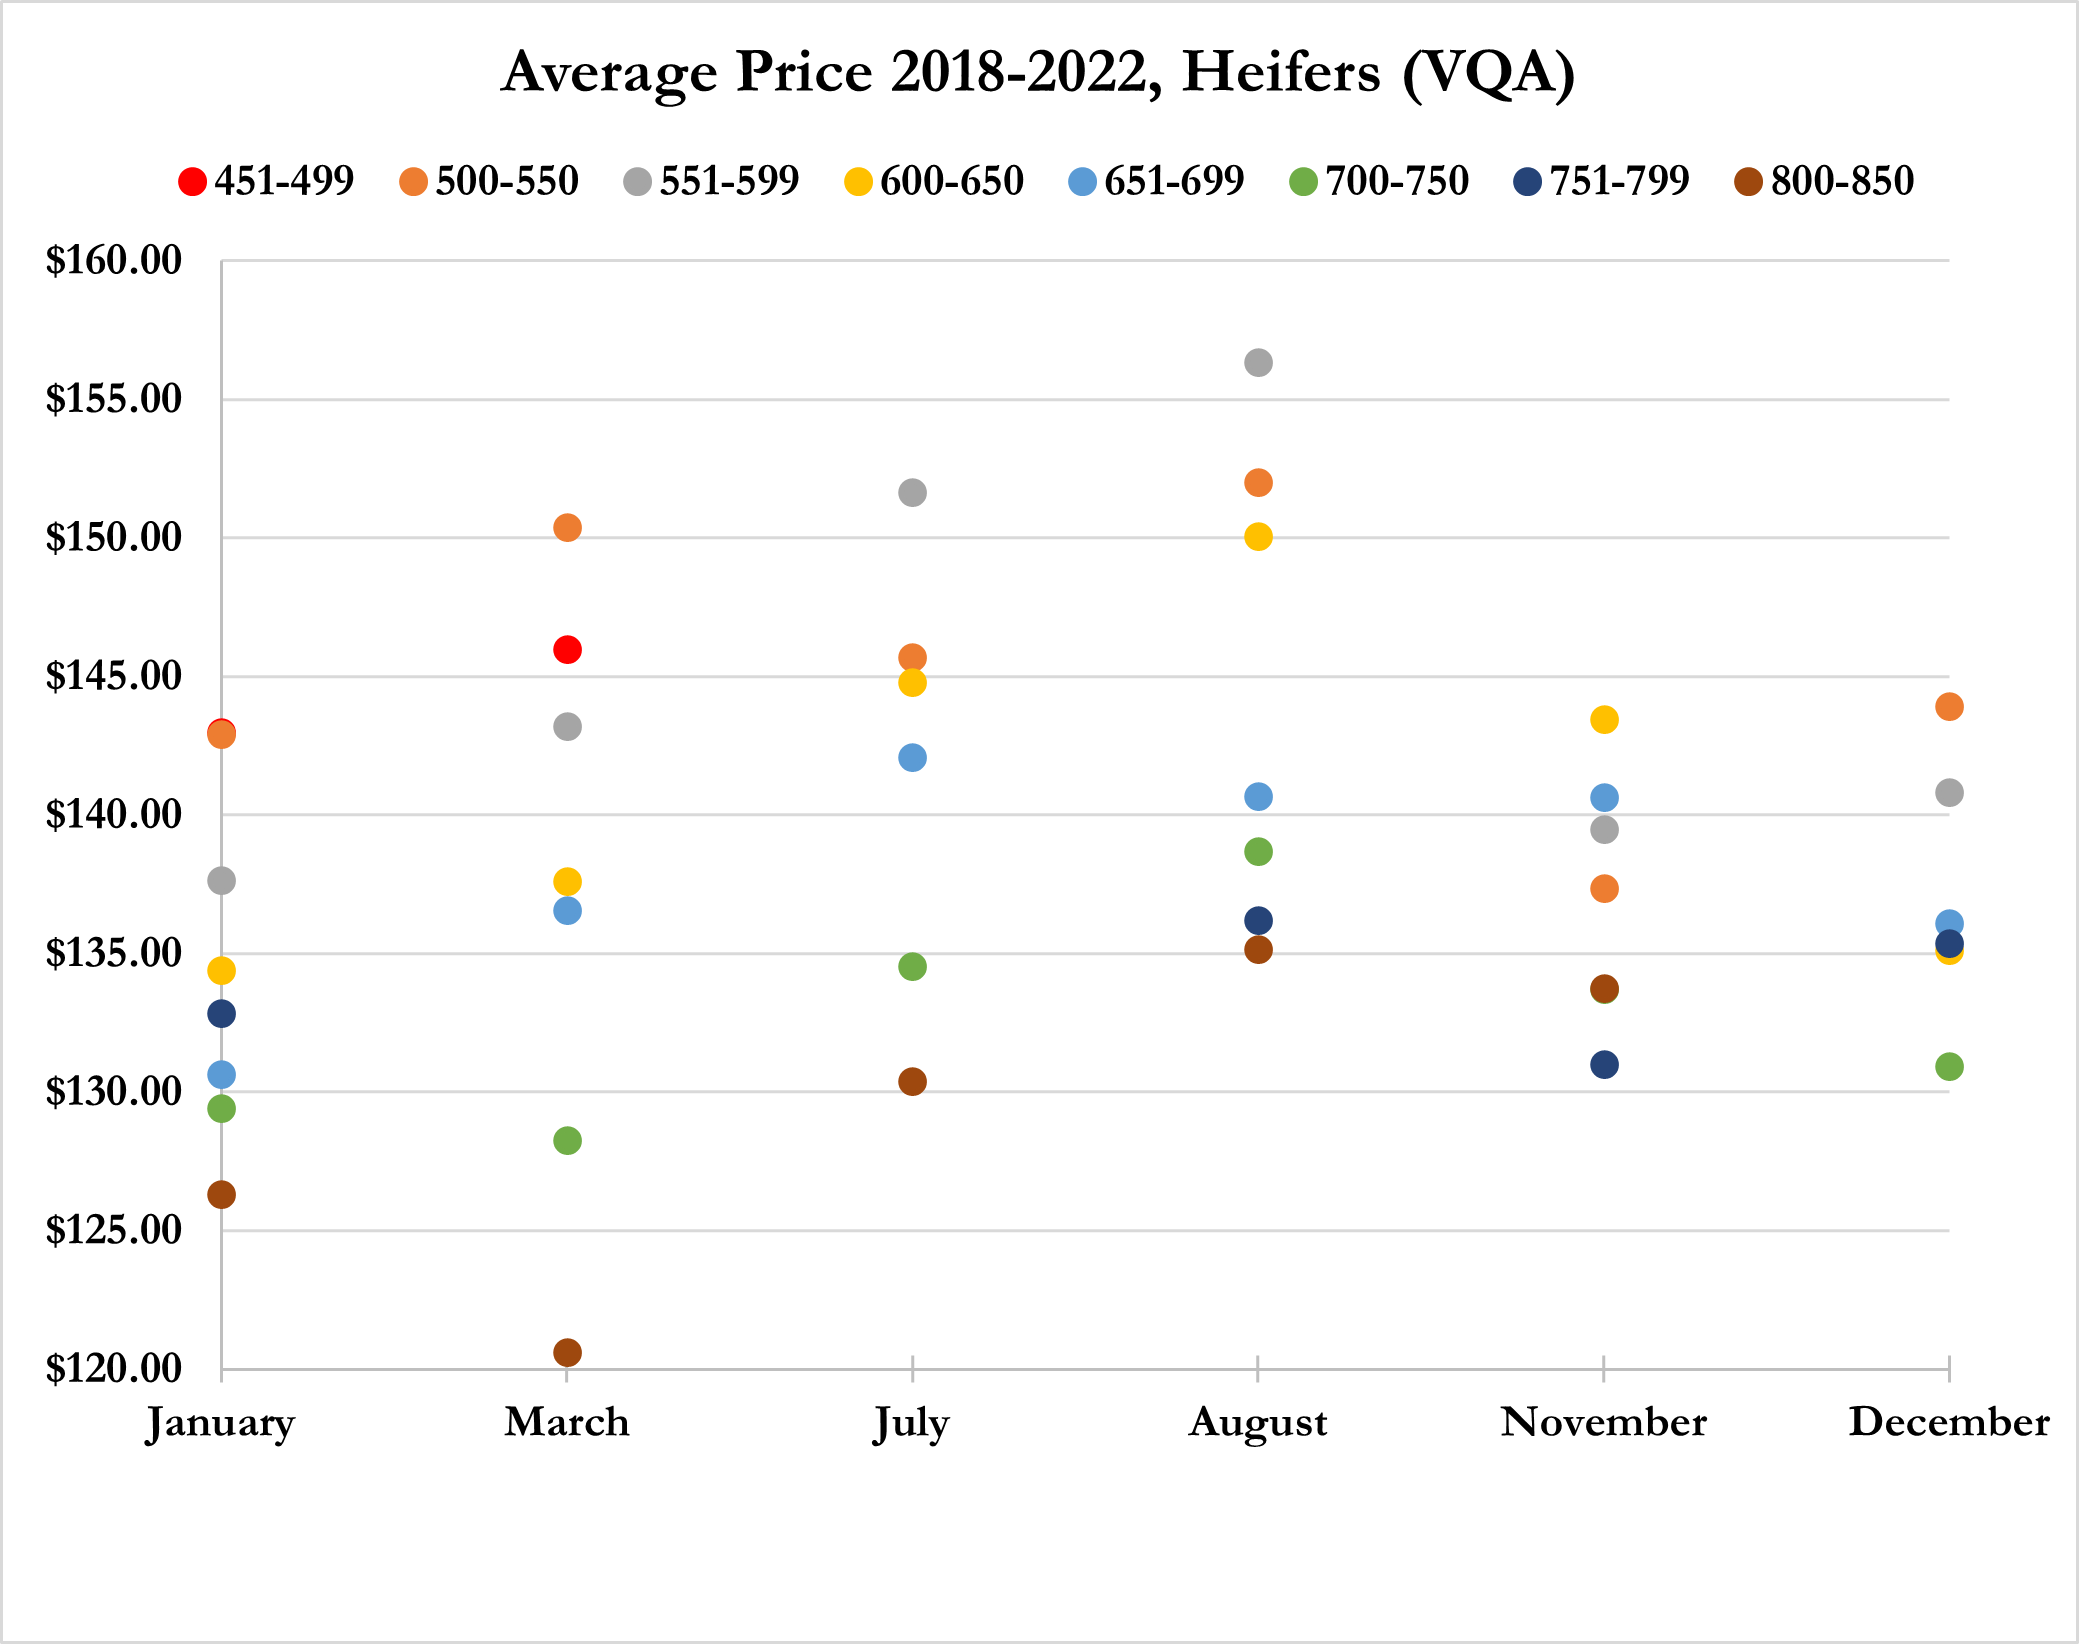 Average price for heifers 2018-2022